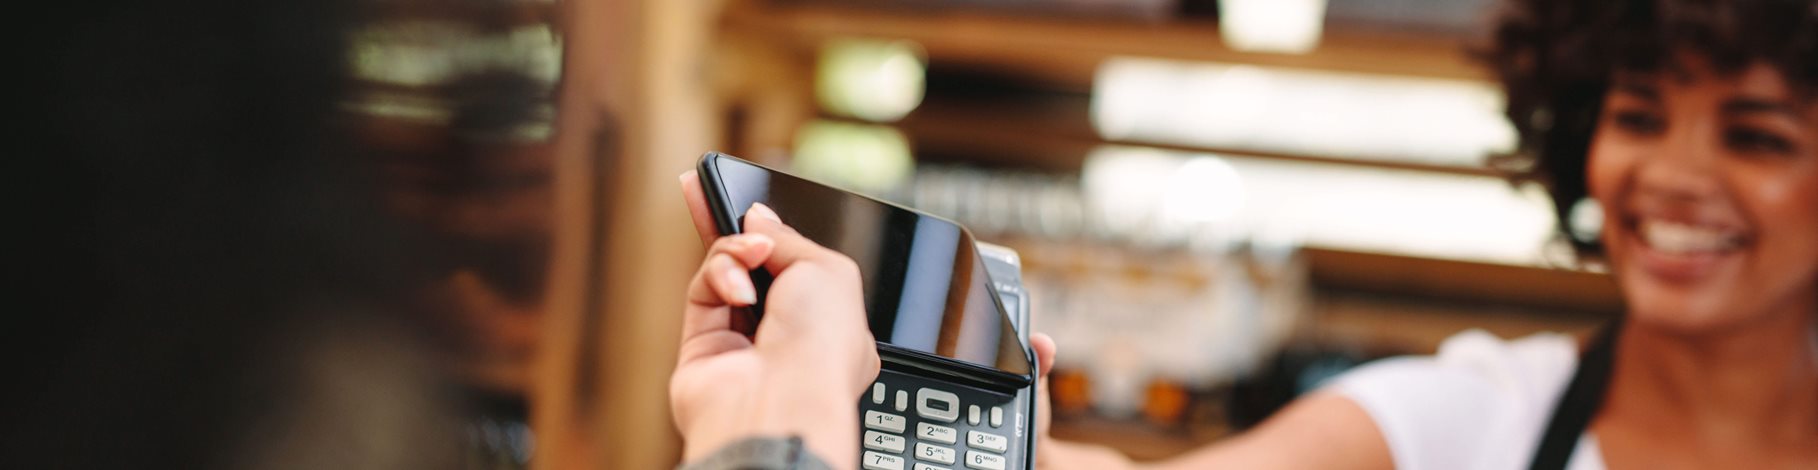 Customer paying bill using smartphone